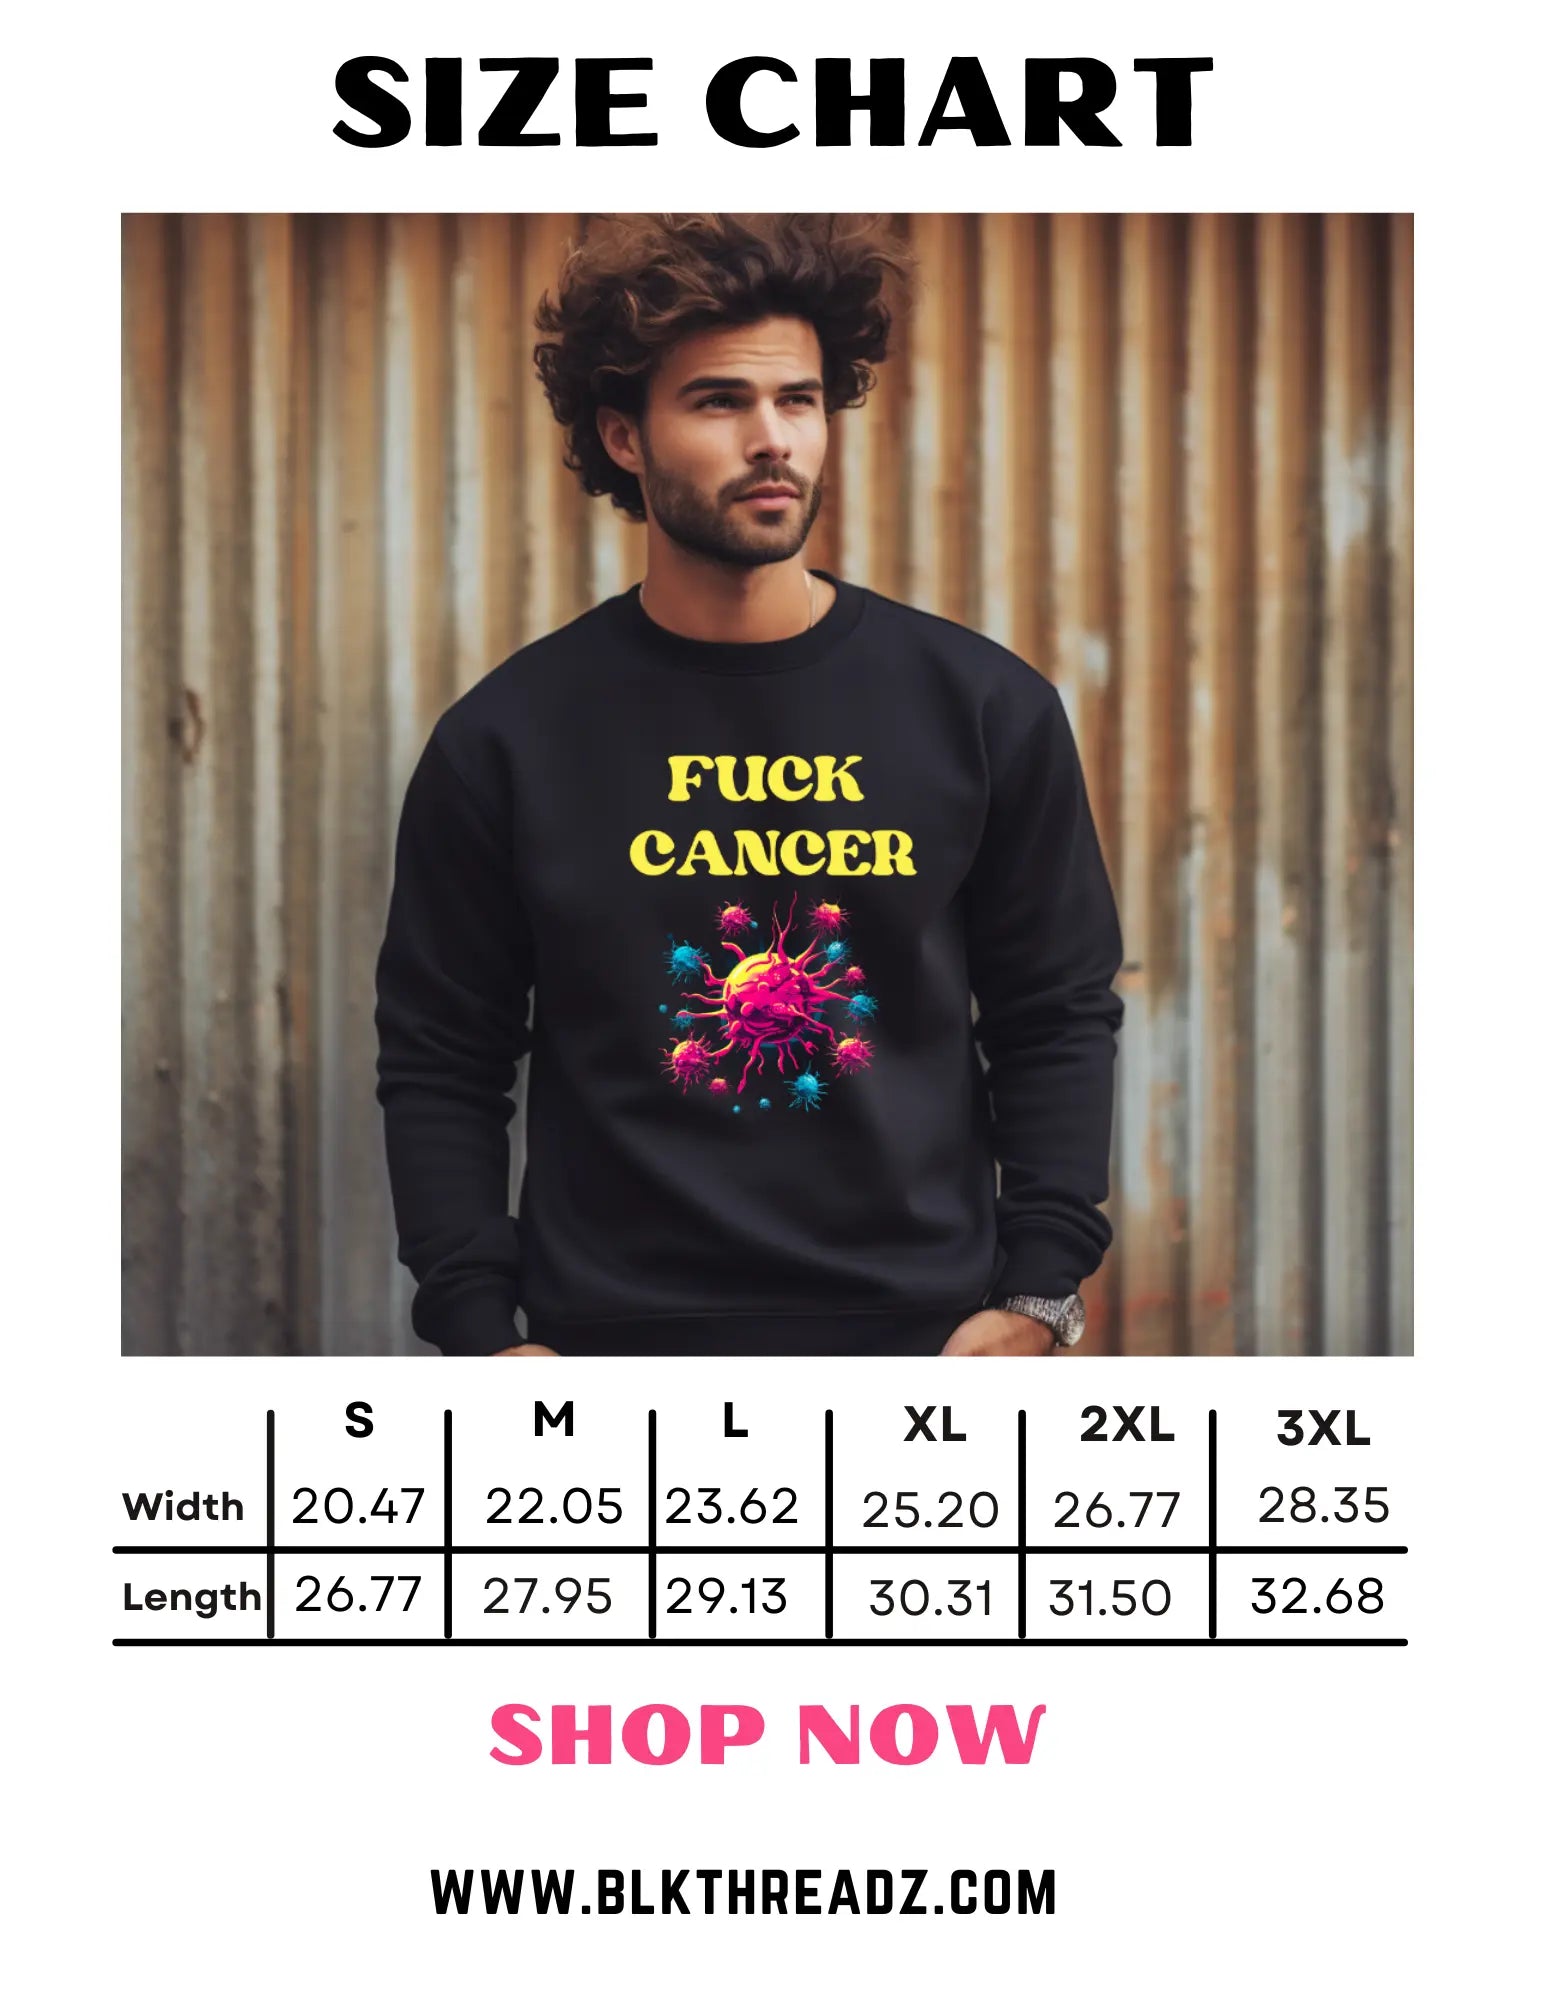 The $hit Graphic Sweatshirt for Laid-Back Statements - Black Threadz